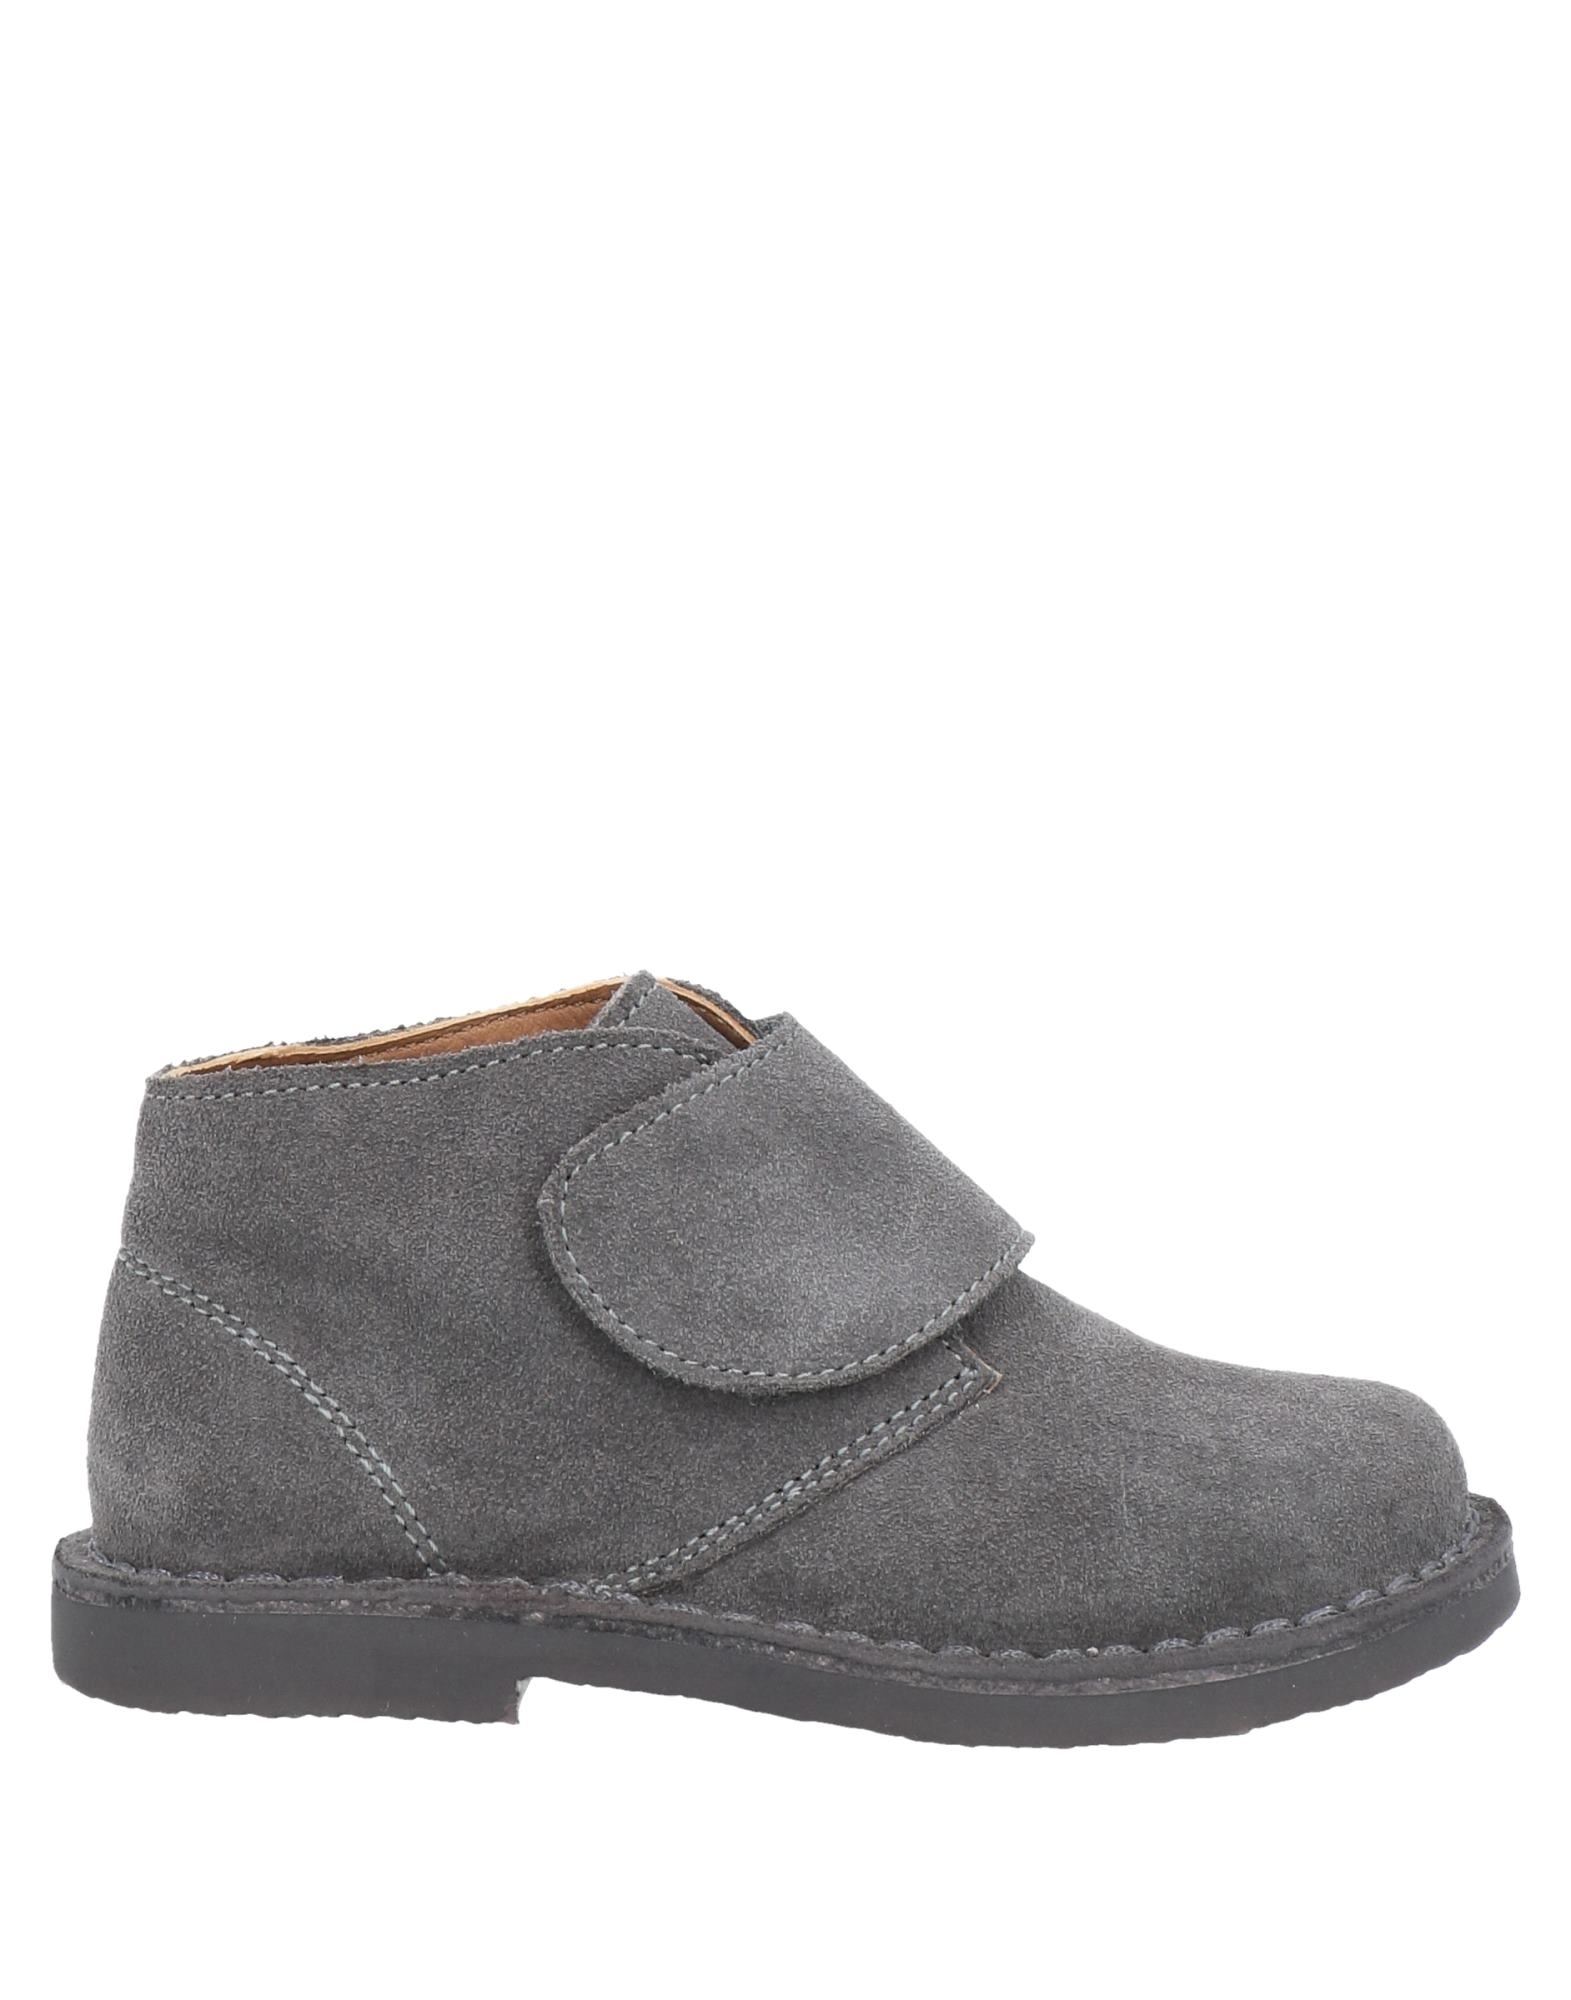 Oca-loca Ankle Boots In Grey